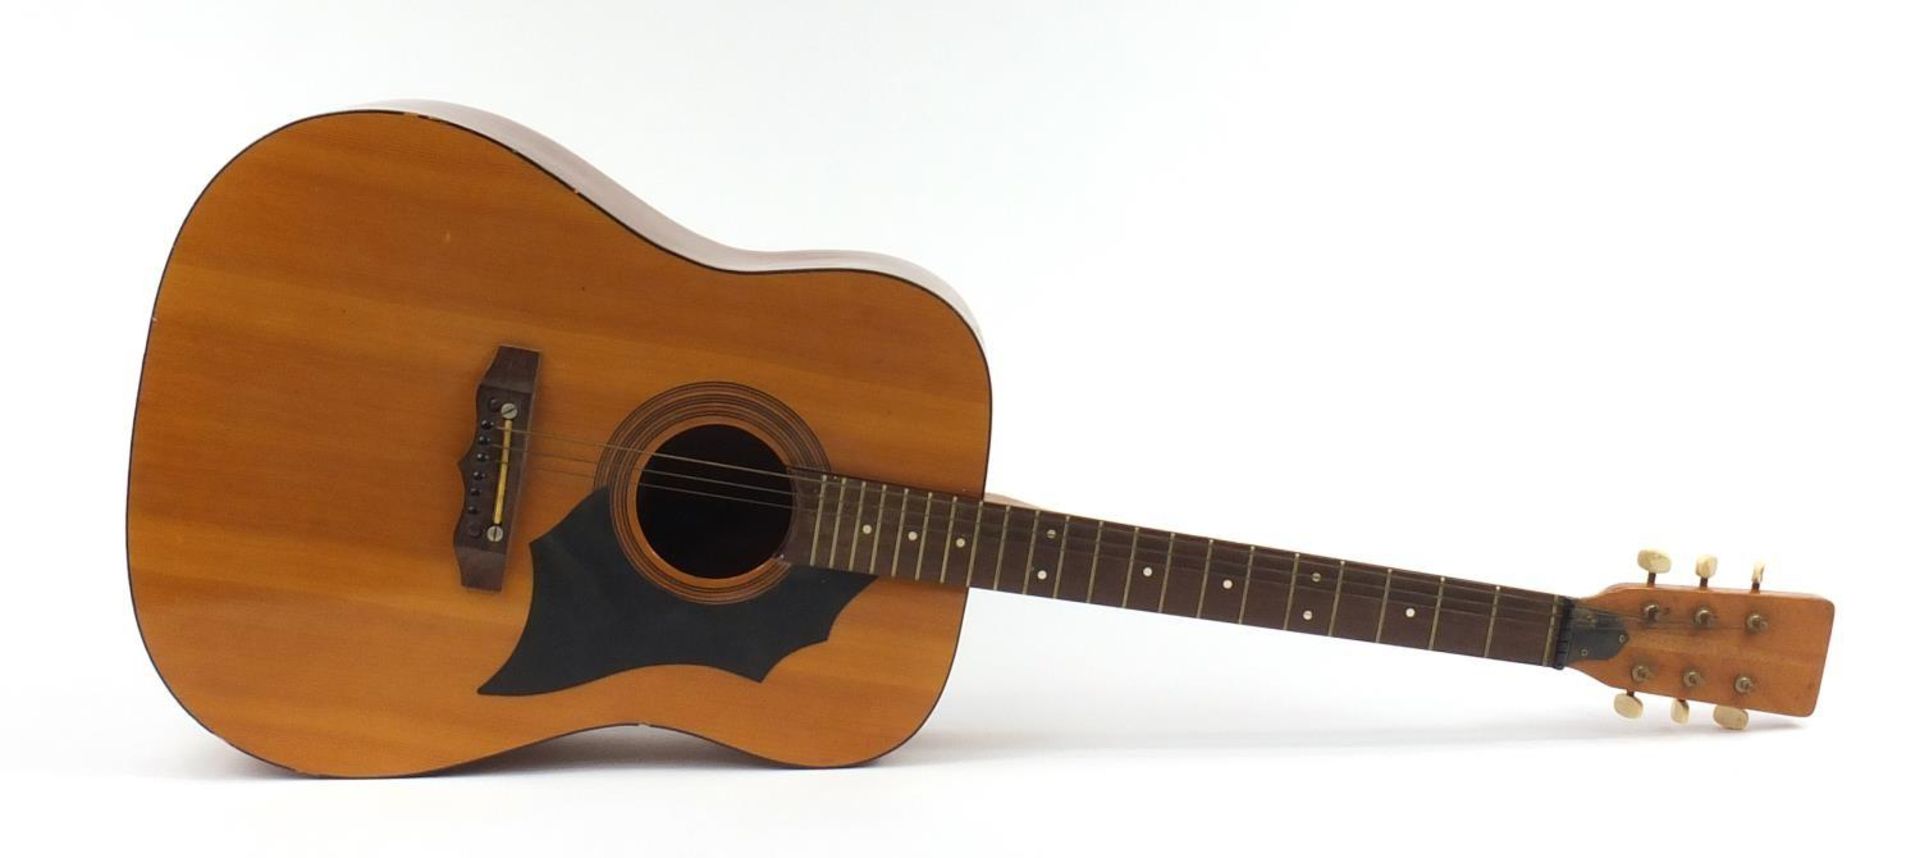 Italian six string acoustic guitar model KD28/D, 105cm in length